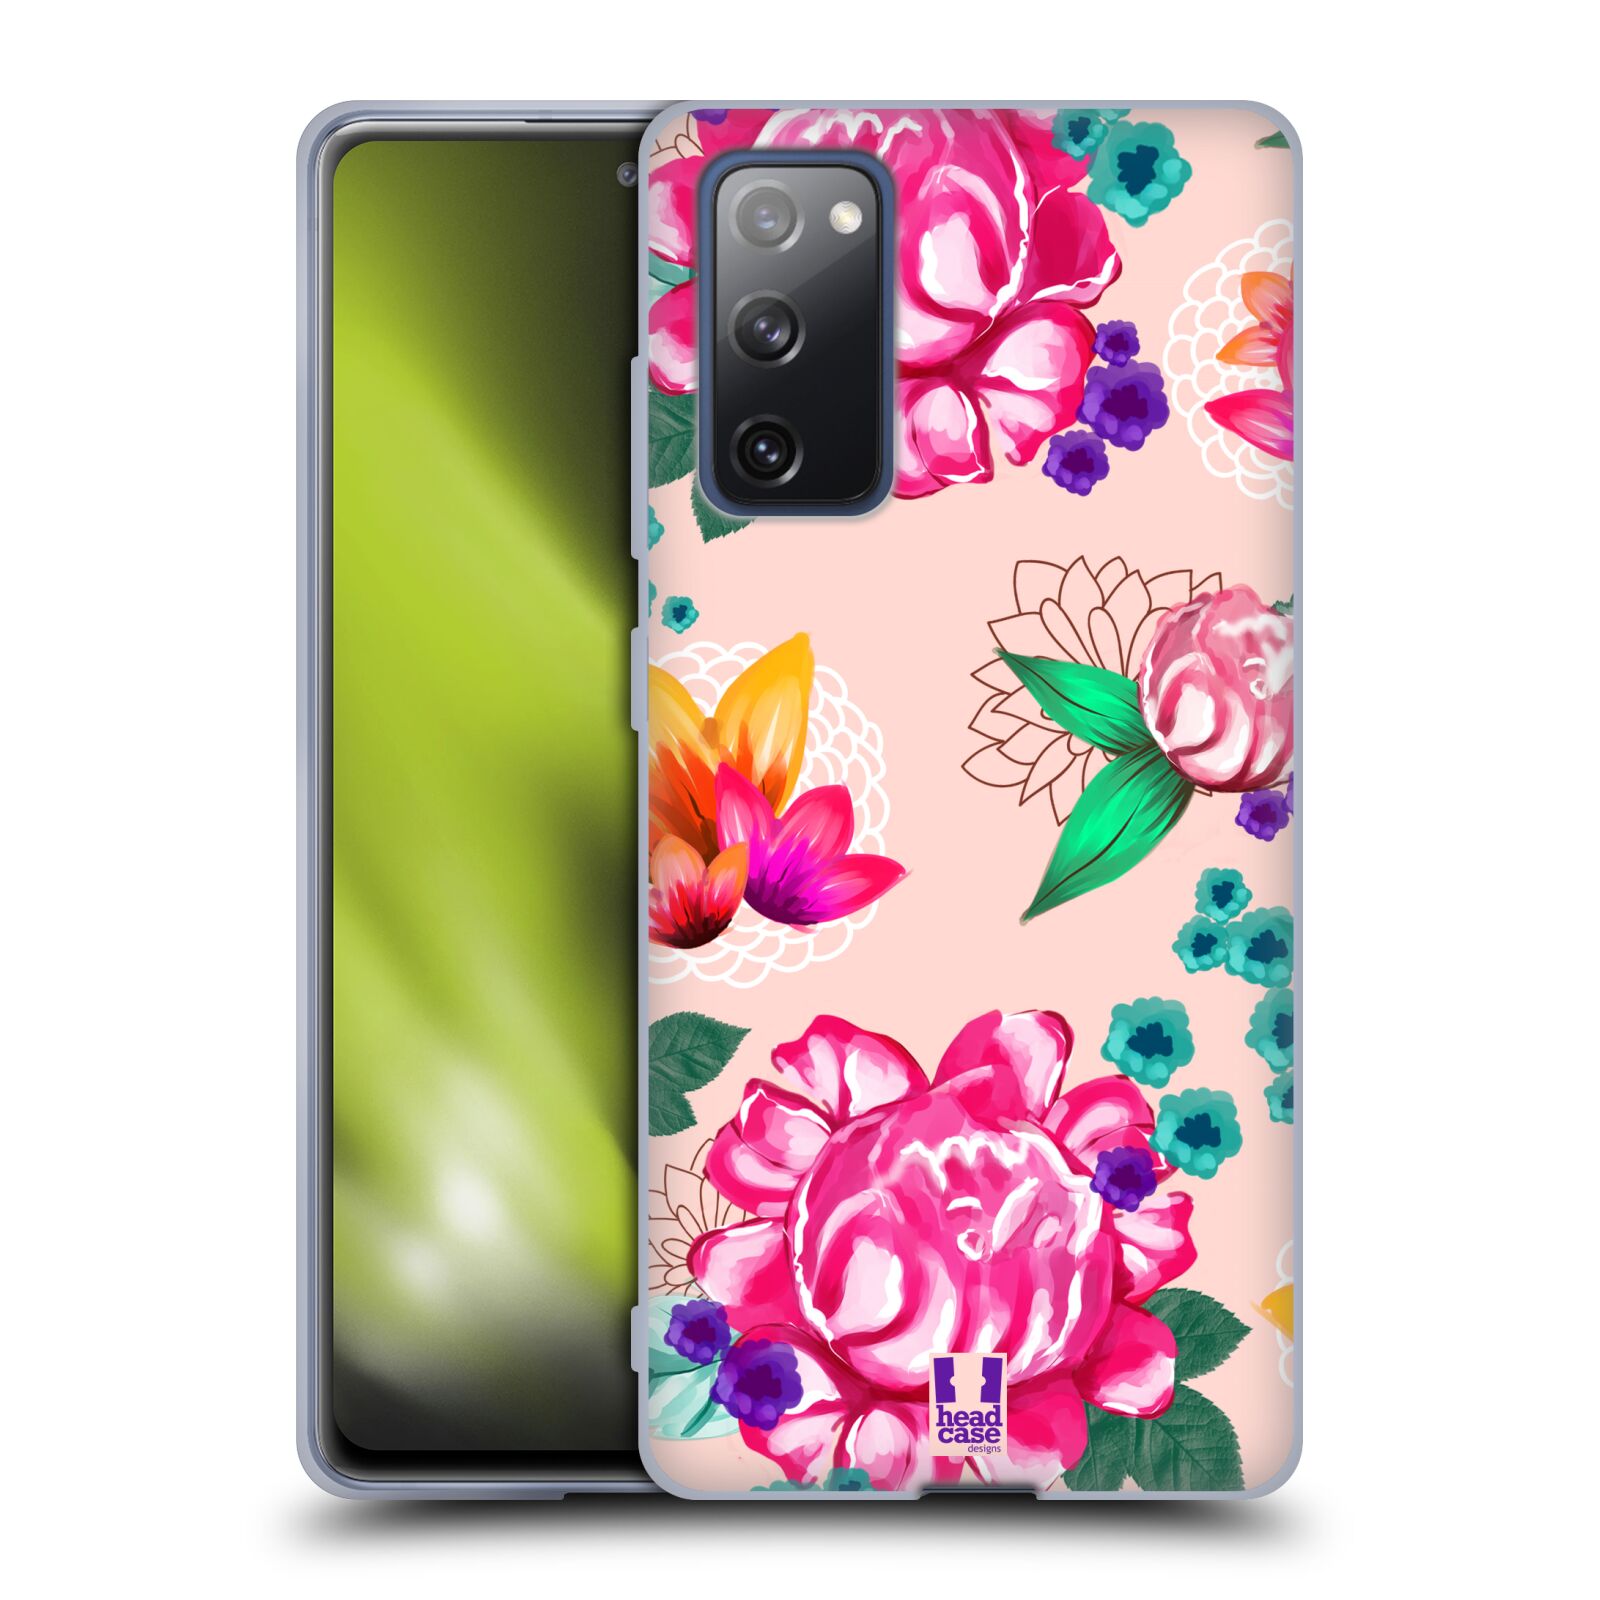 Plastový obal HEAD CASE na mobil Samsung Galaxy S20 FE / S20 FE 5G vzor Malované květiny barevné SVĚTLE RŮŽOVÁ